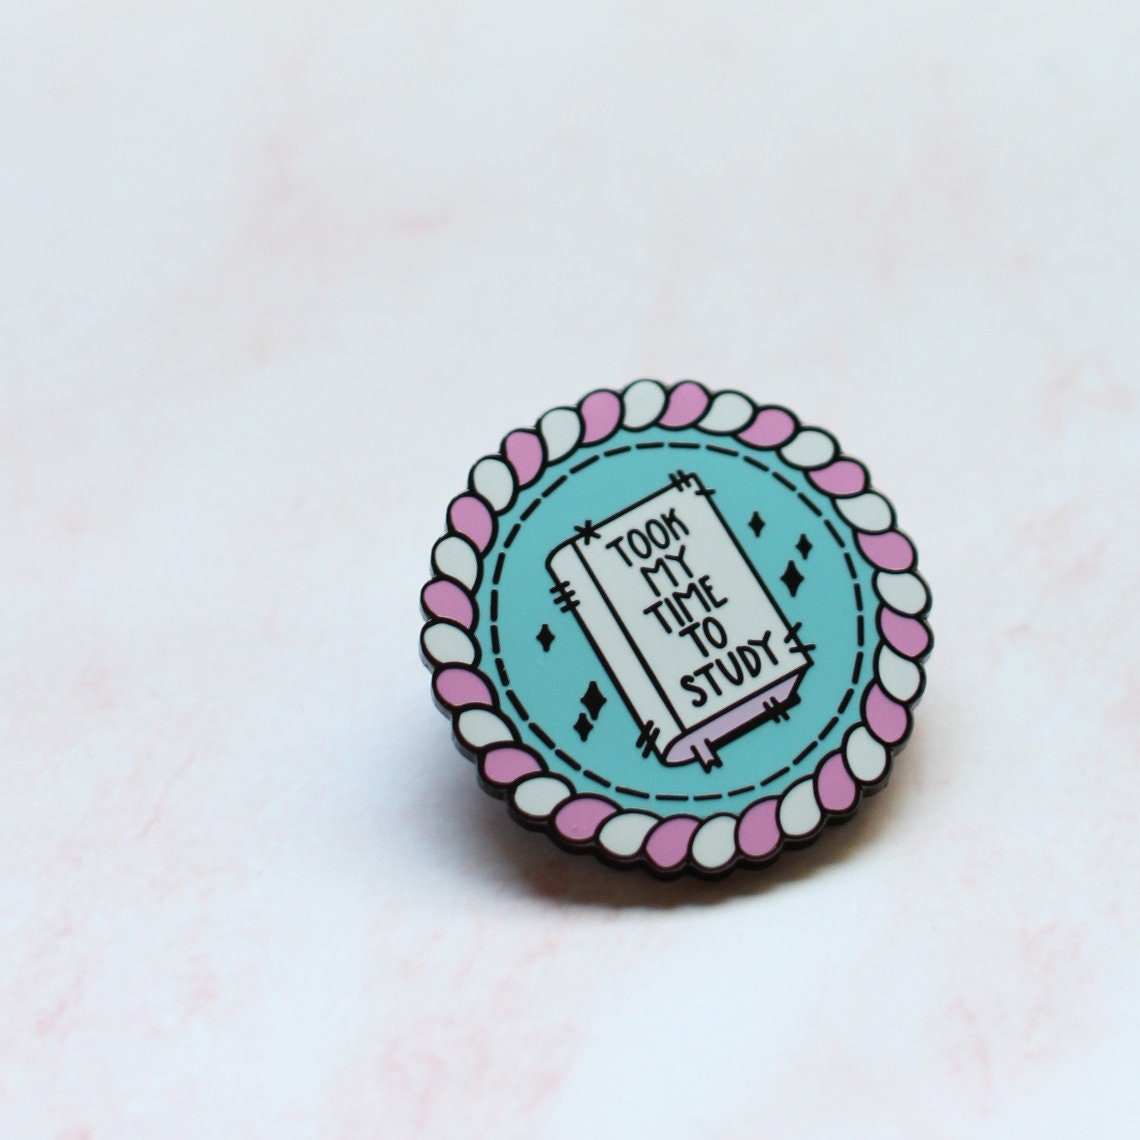 Took My Time To Study | Self Care Badge | Self Love Collectors Hard Enamel Pin Badge | Kawaii Aesthetic Birthday Gift | Christmas Present